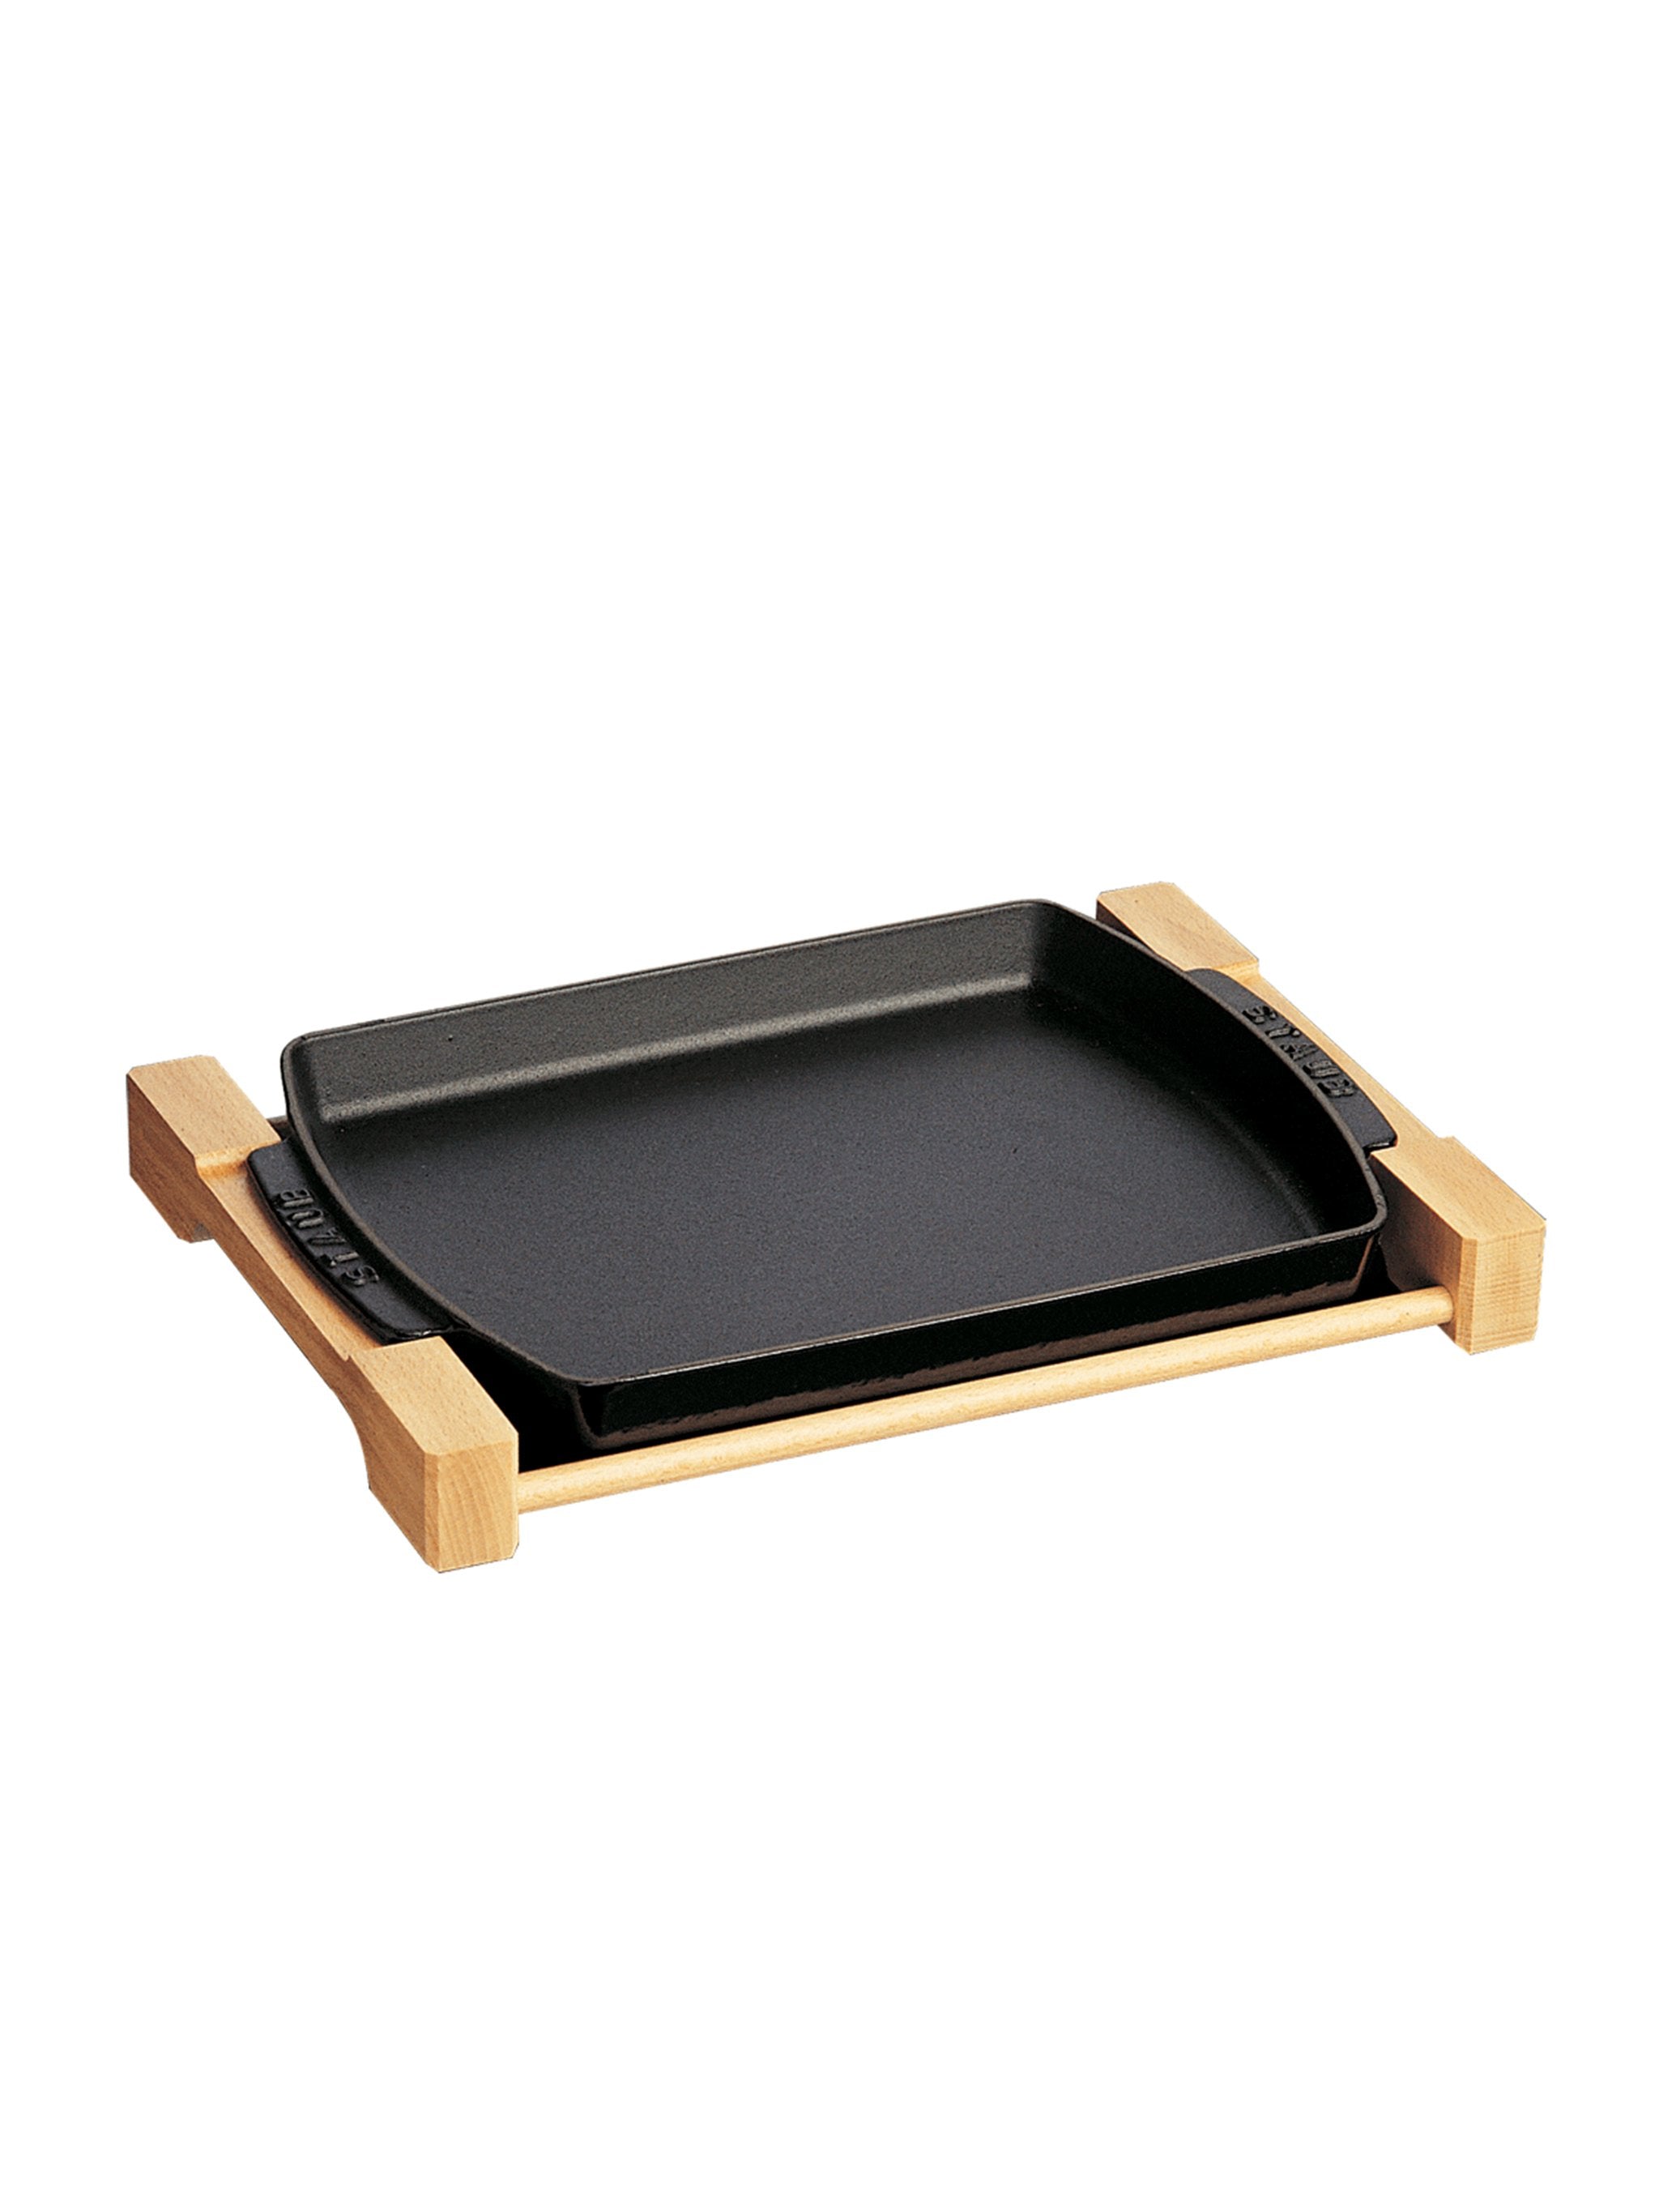 LAVA Premium Cast Iron Rectangular Roasting and Baking Tray